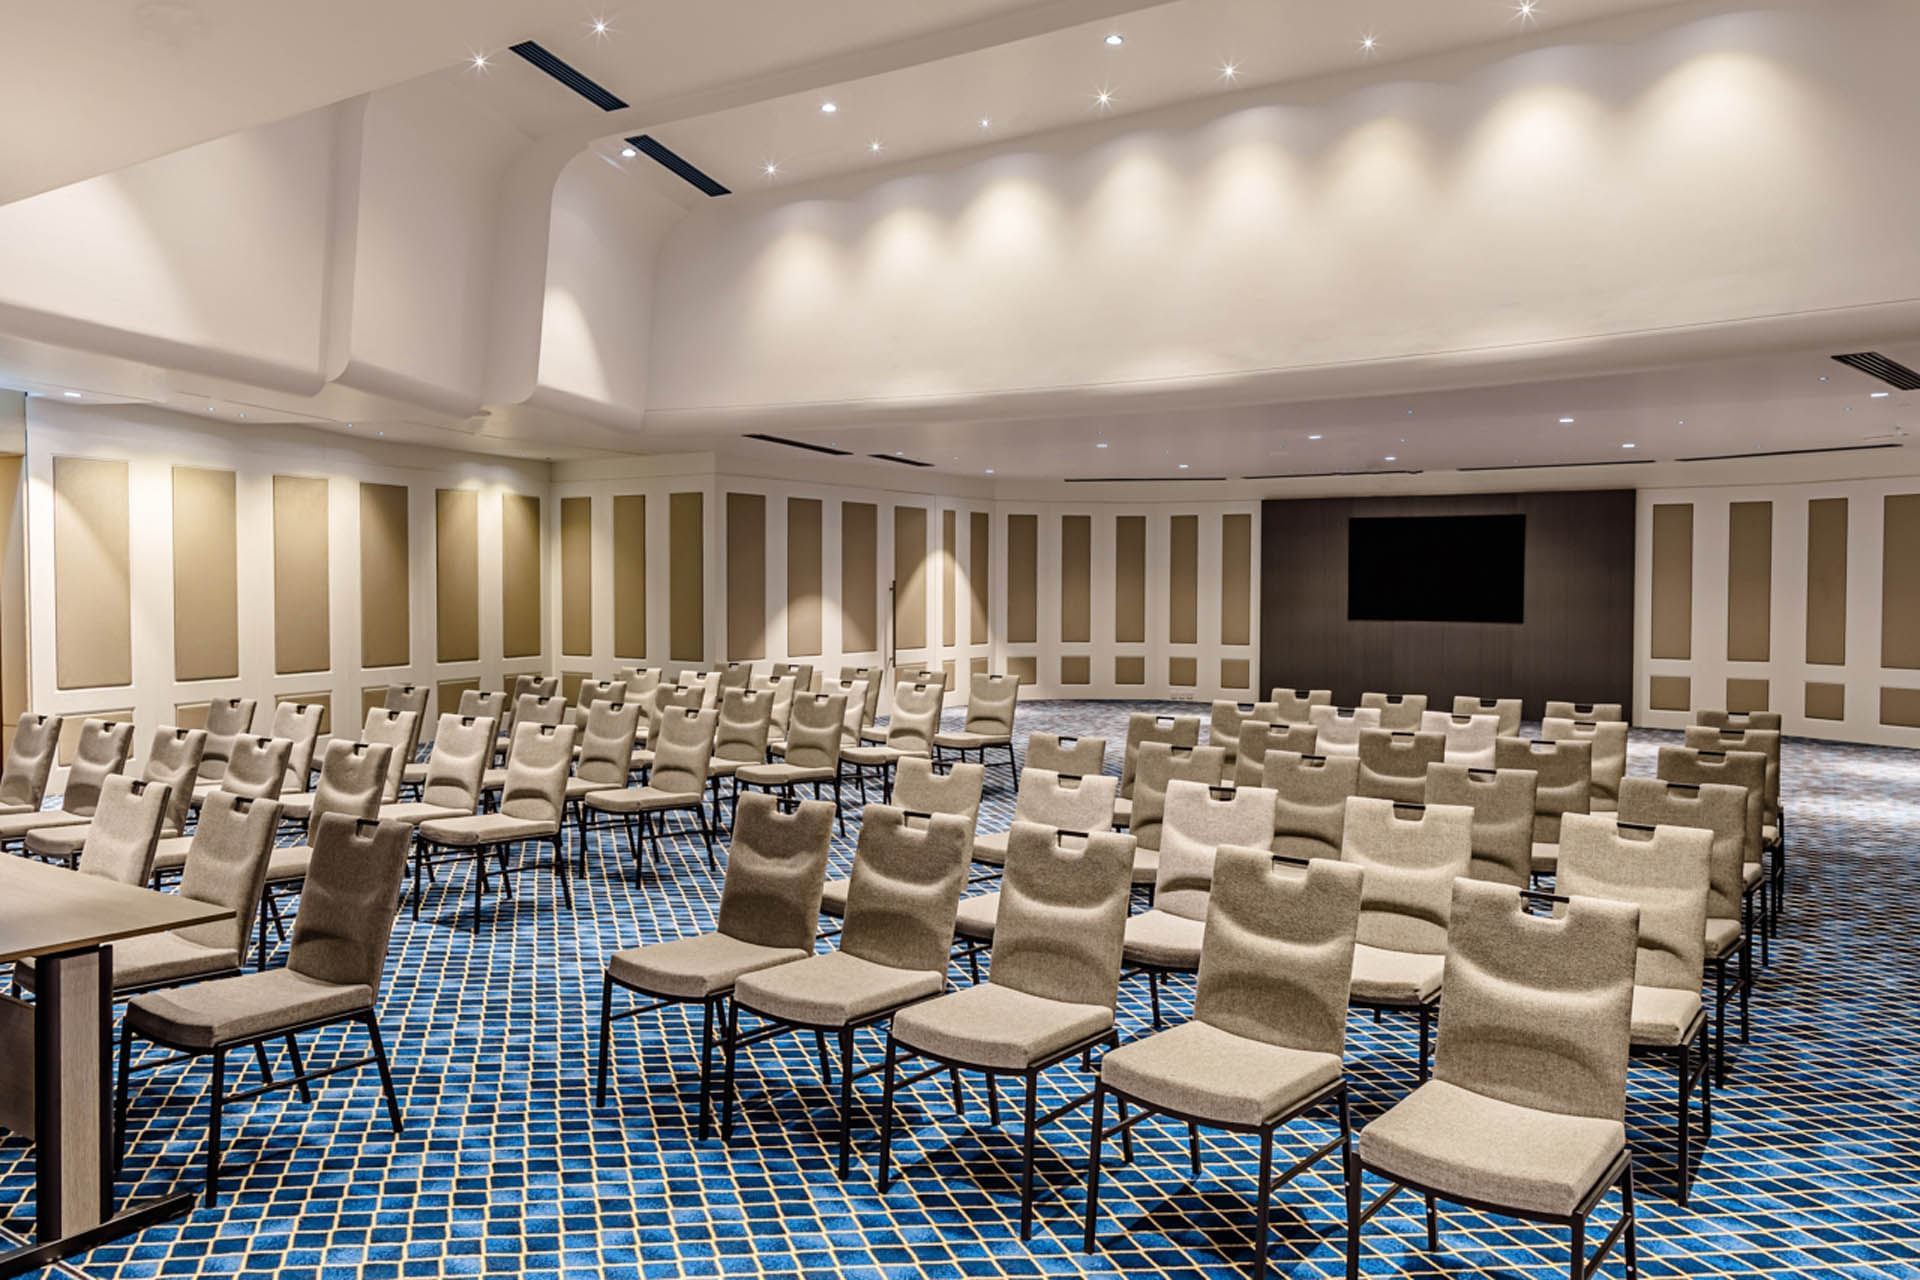 Chairs arranged for a seminar at Paramount Hotel Dubai